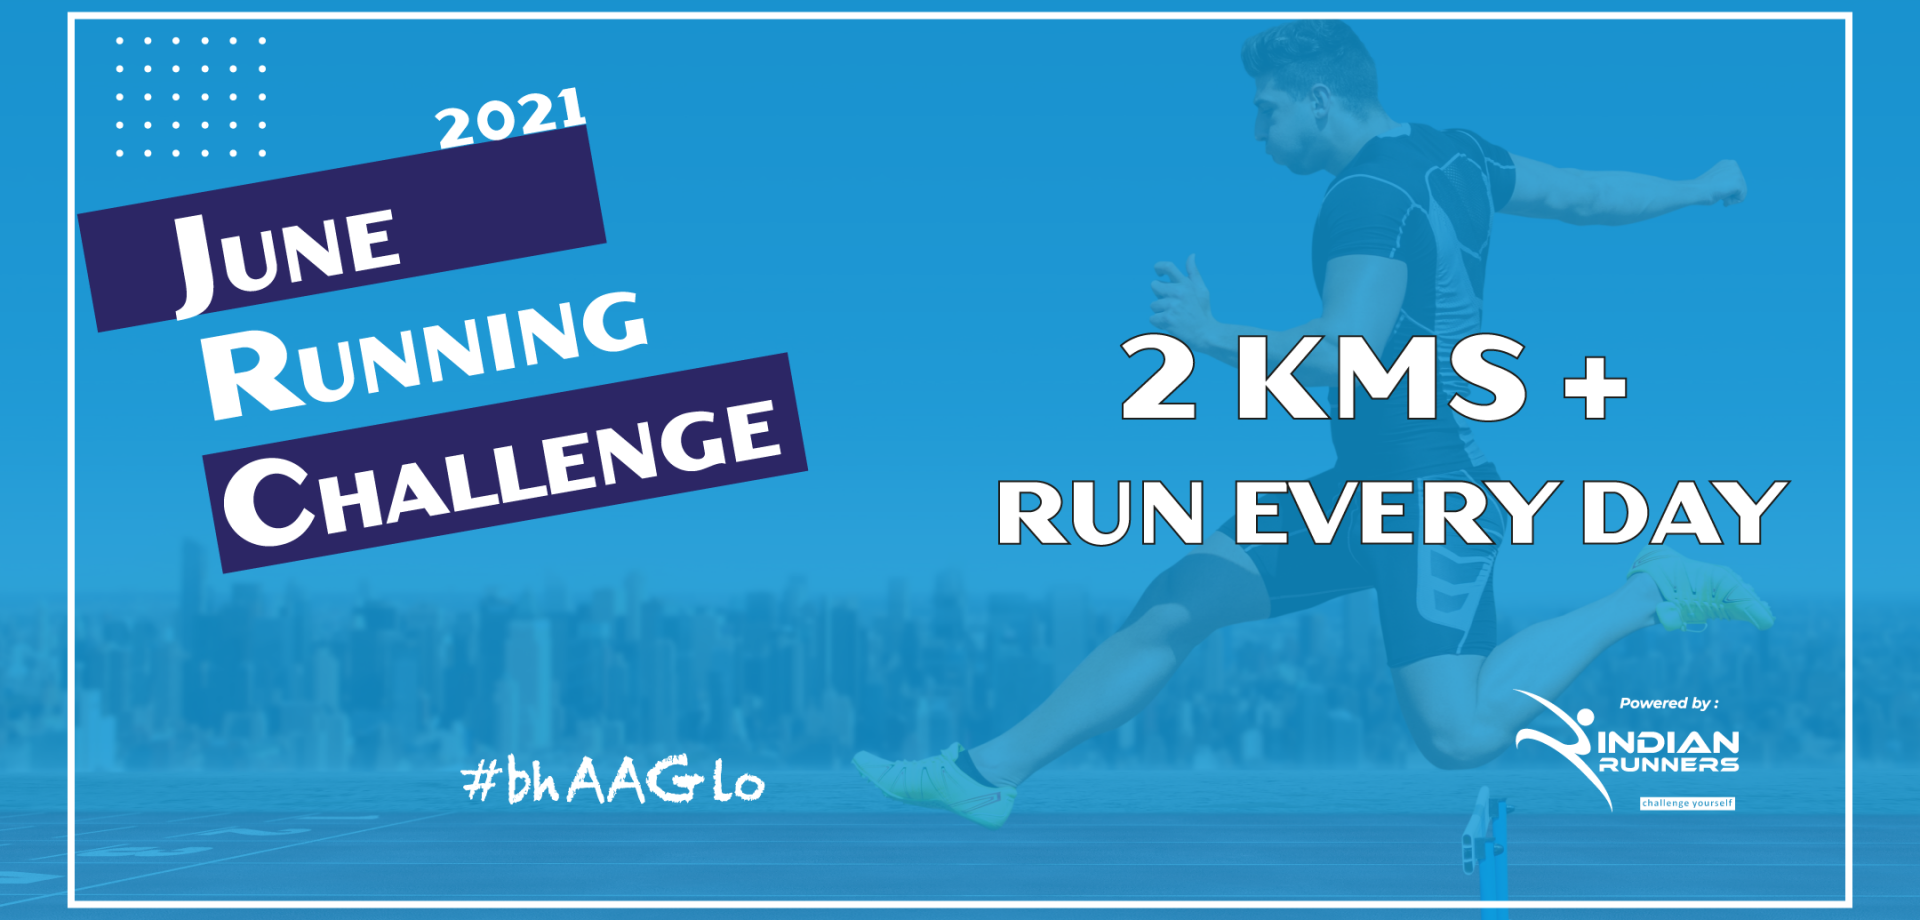 june running challenge 2021